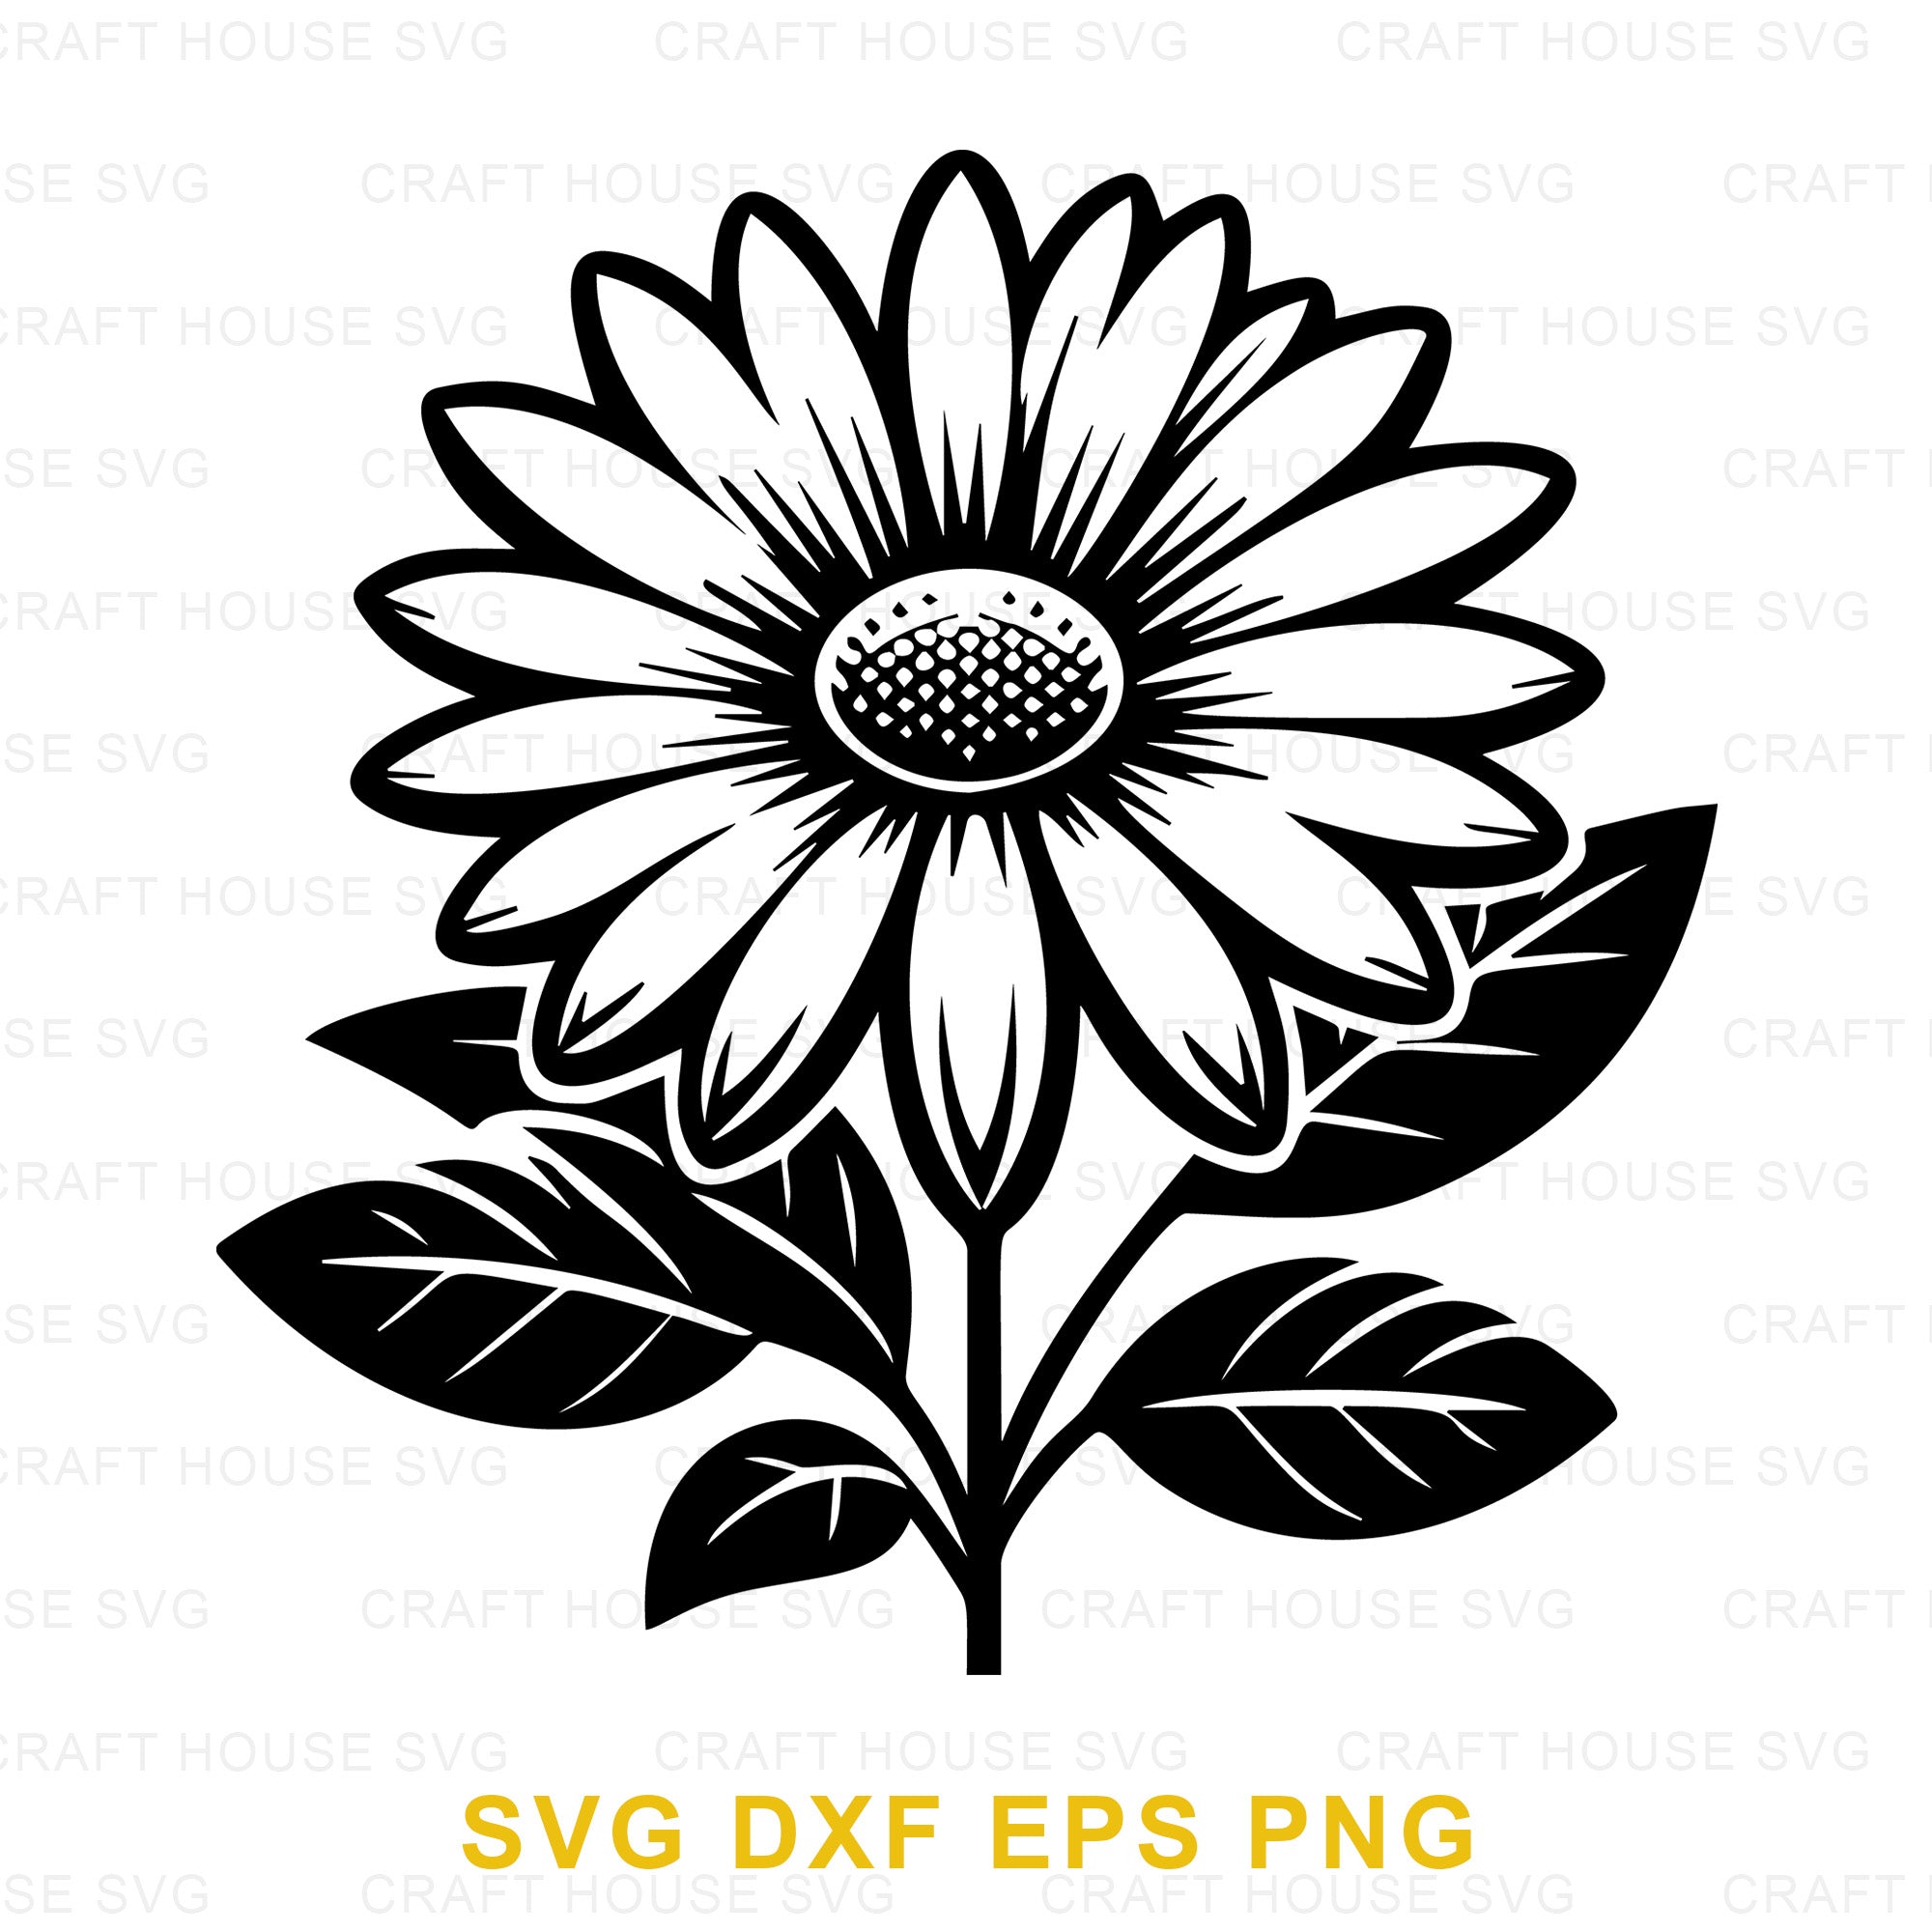 Intricate Daisy Flower SVG